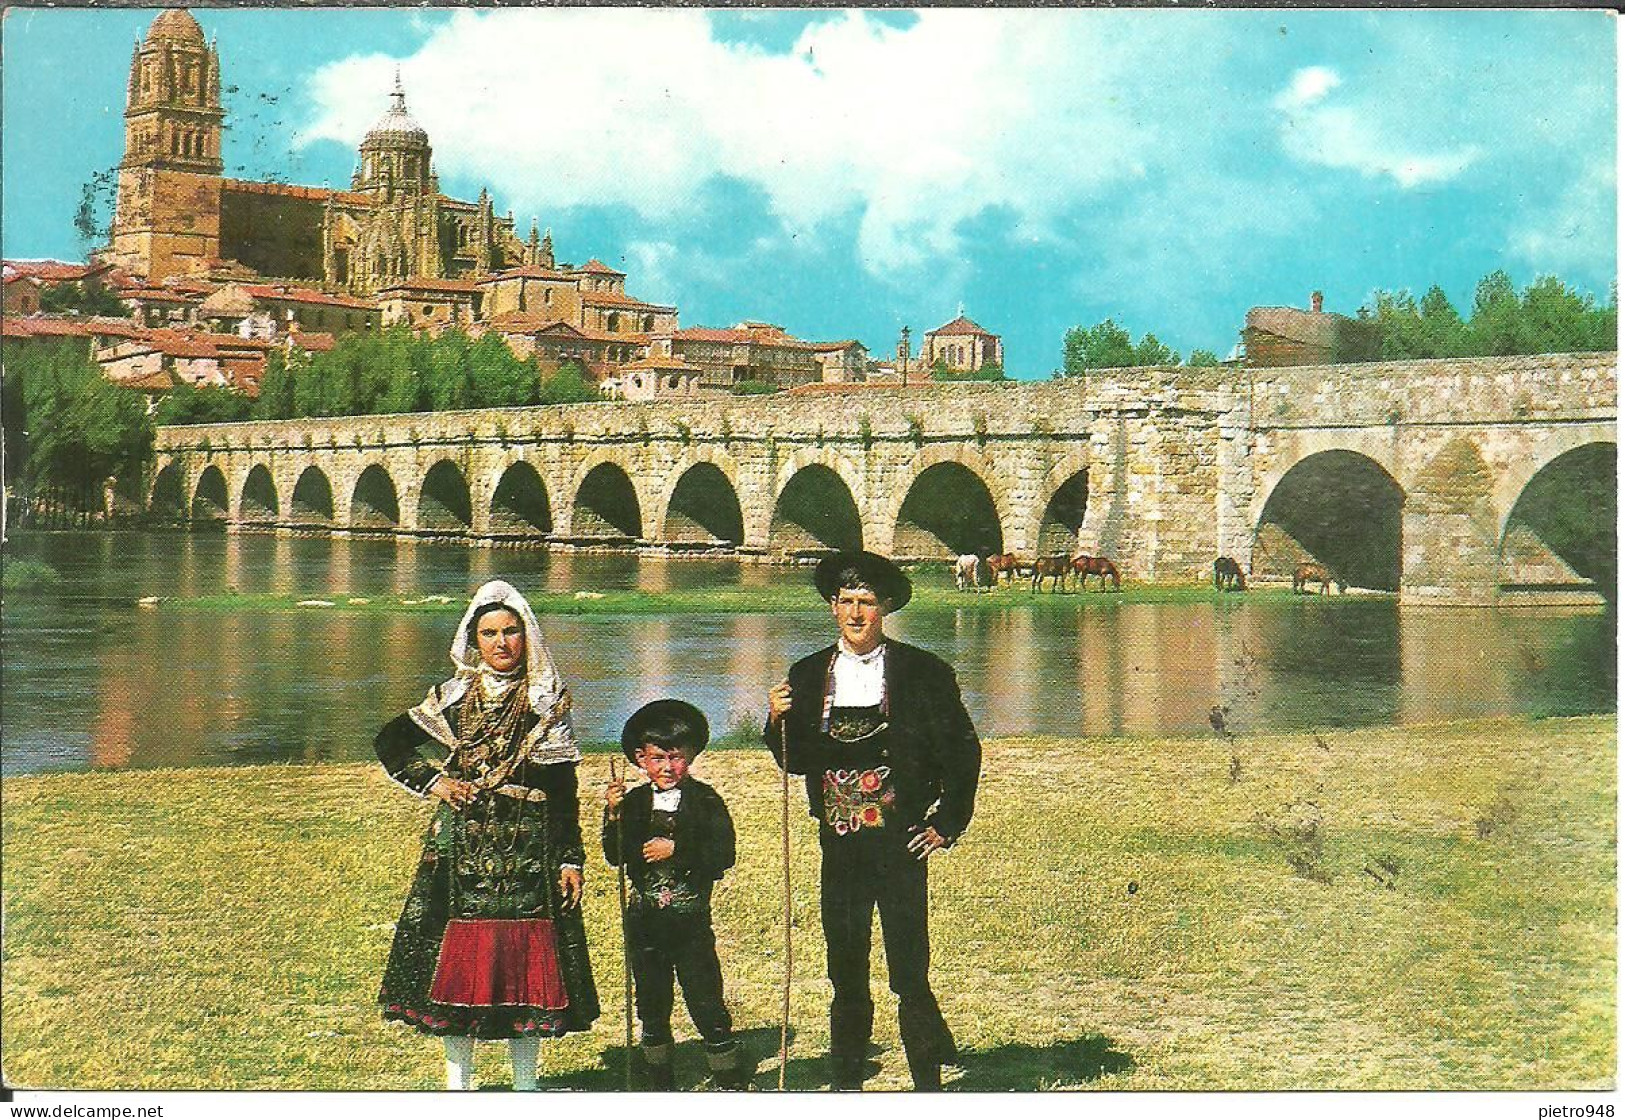 Salamanca (Castilla Y Leon, Espana) Puente Romano, Charros Tipicos, Pont Romain, Costumes Paysan Tipique, Folklore - Salamanca